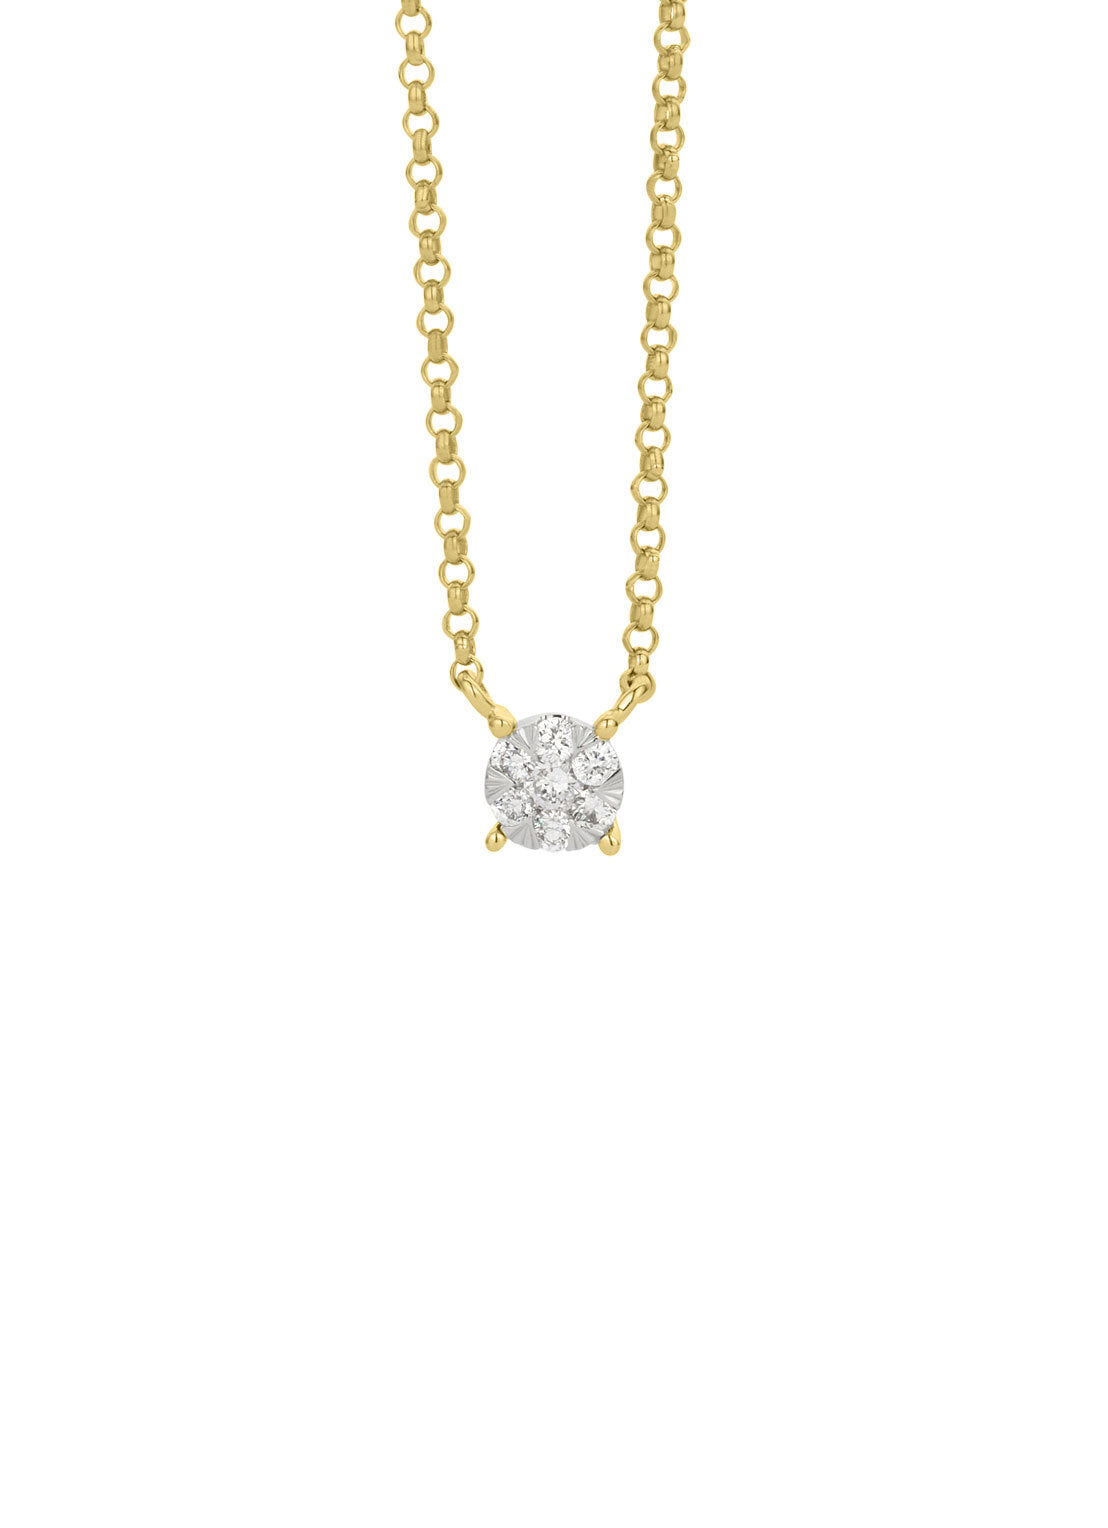 Golden Collier, 0.09 CT Diamond, Enchanted